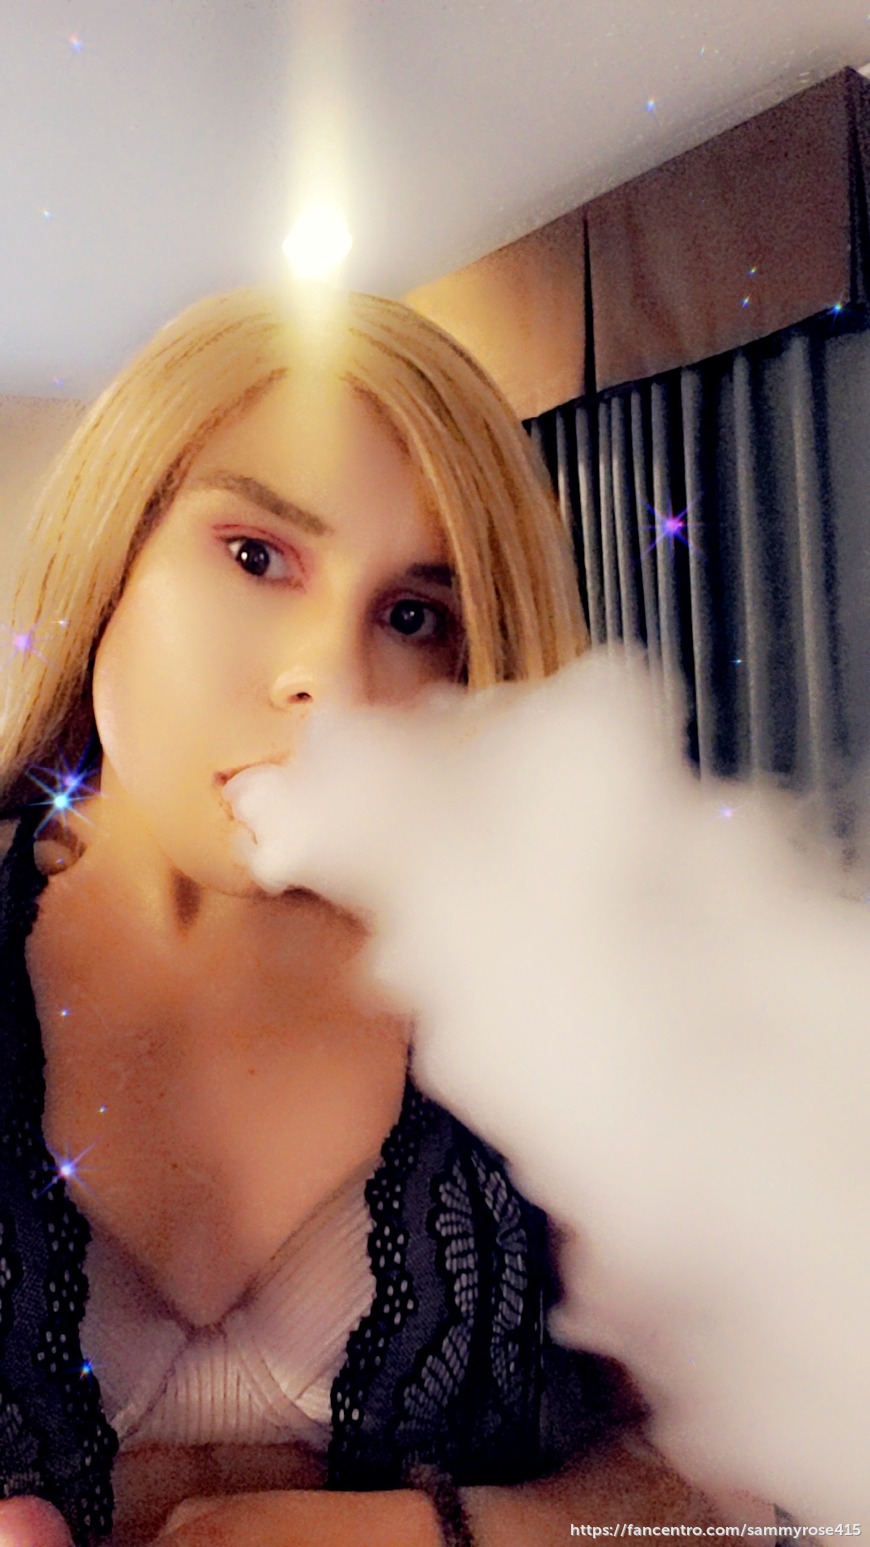 Sexxxxy Smokerrrr 💋💨💨💨💨 1